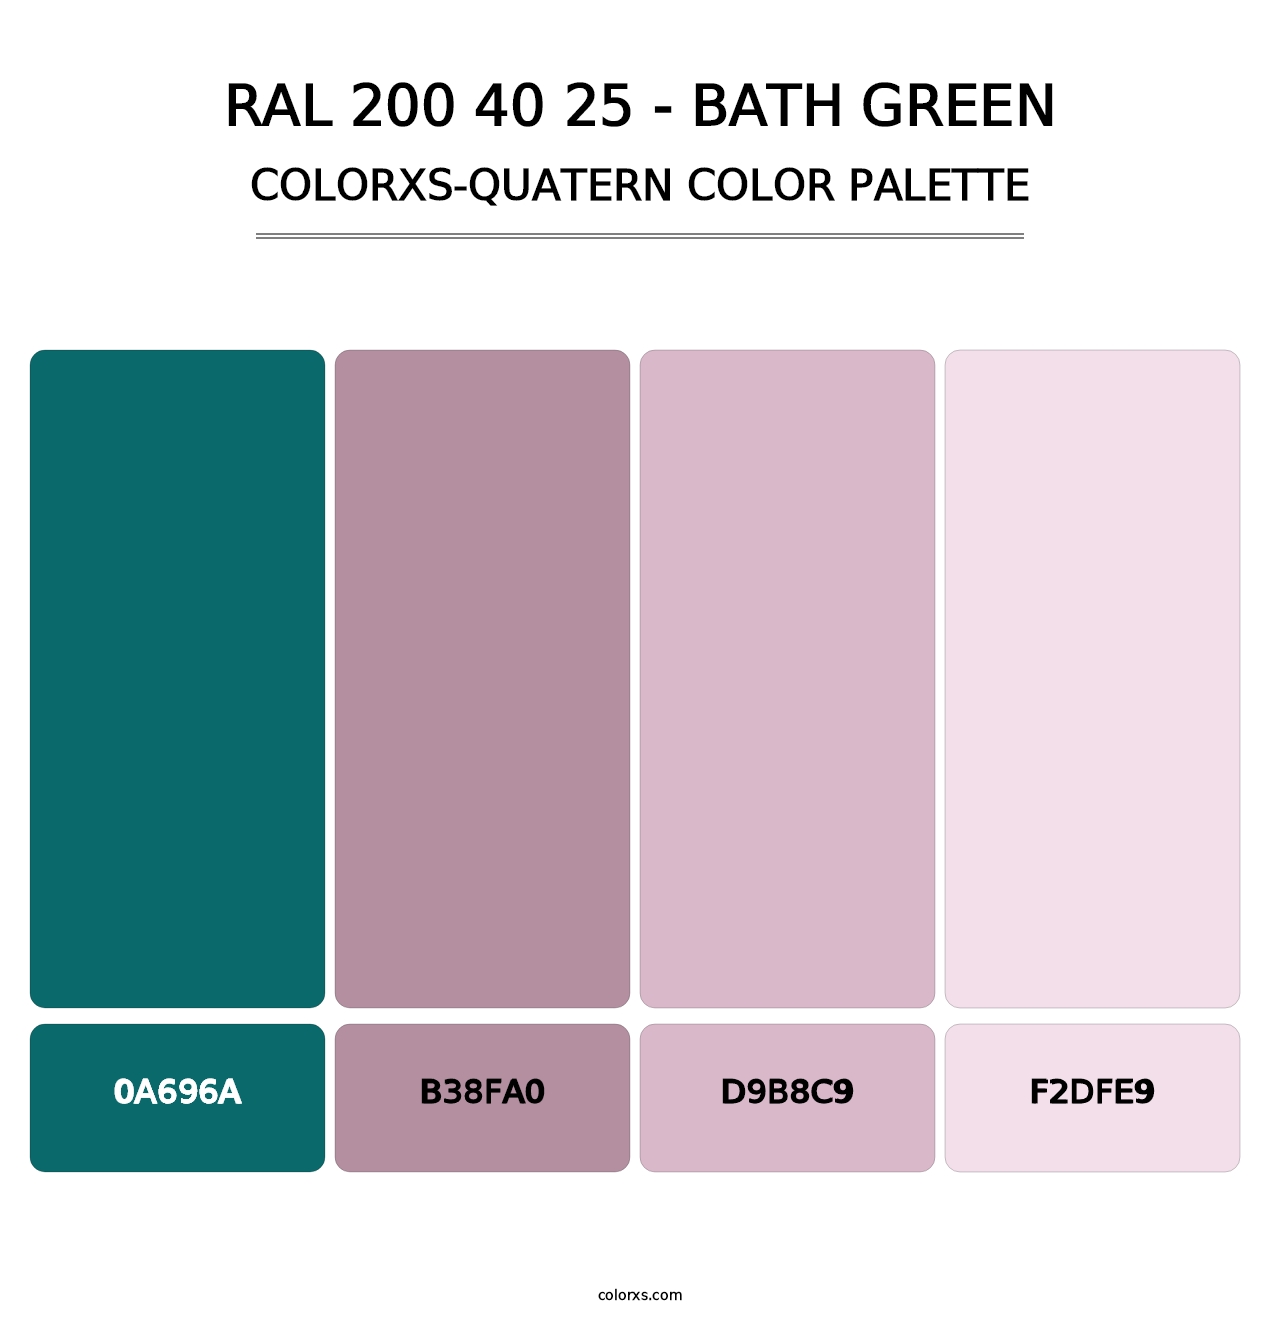 RAL 200 40 25 - Bath Green - Colorxs Quatern Palette